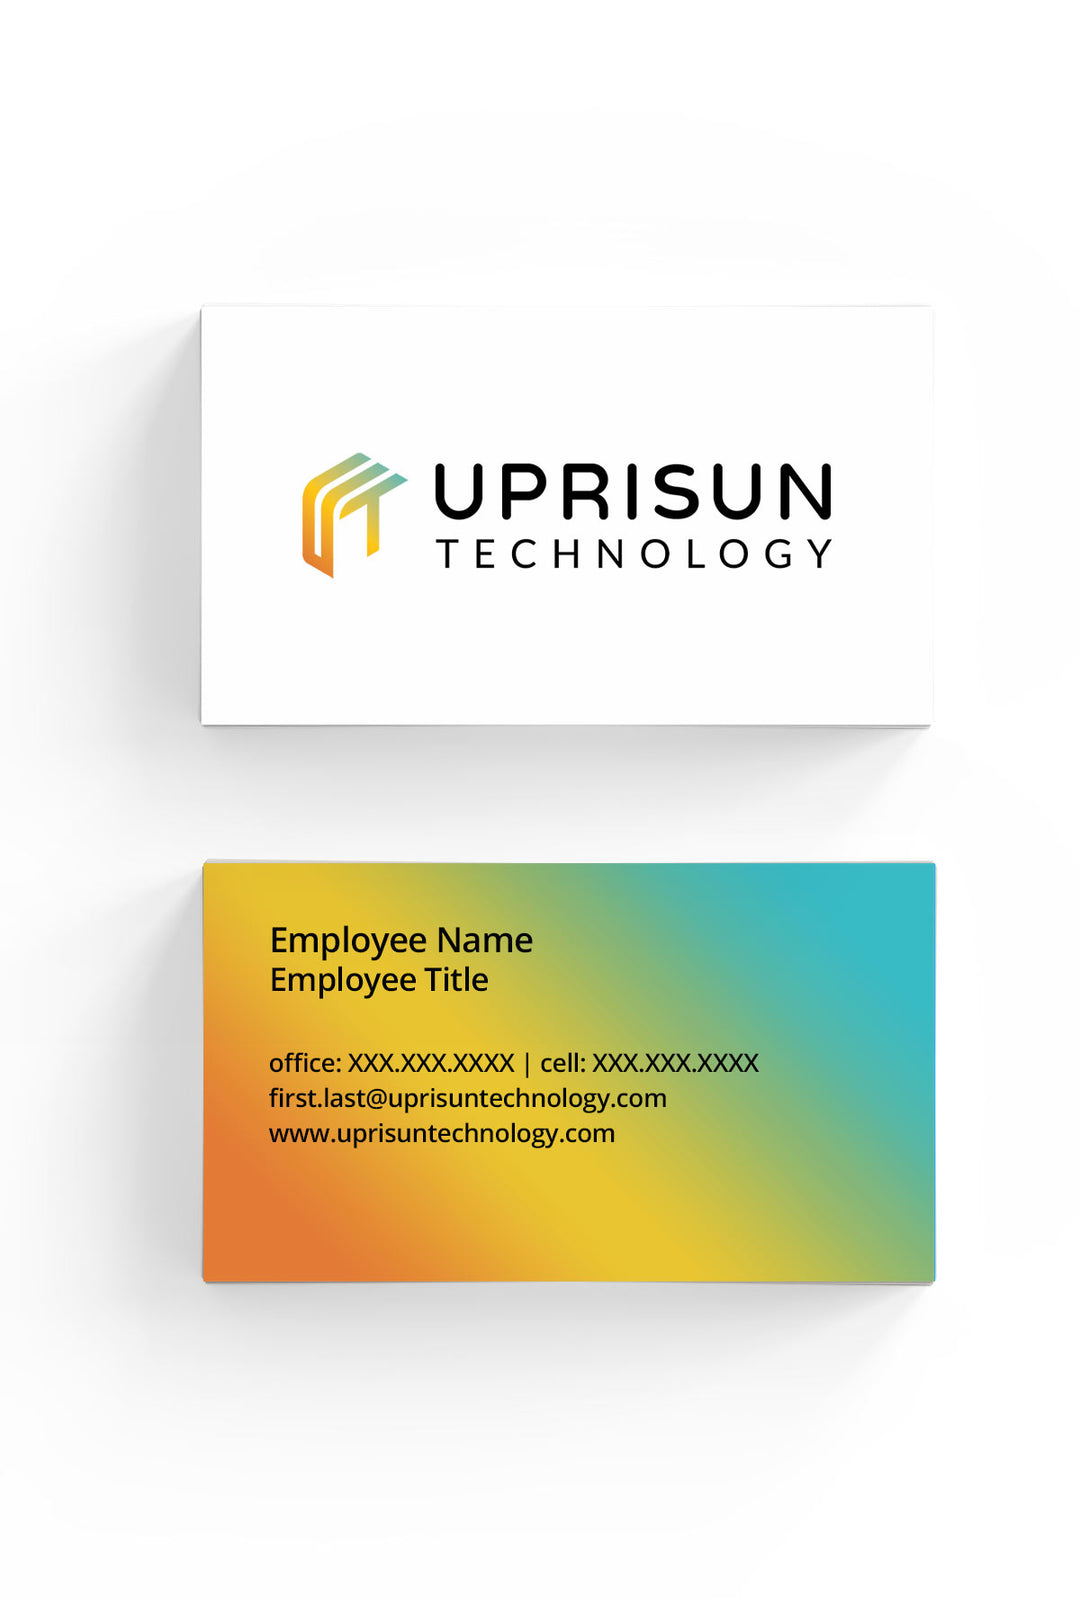 Uprisun Technology Business Cards